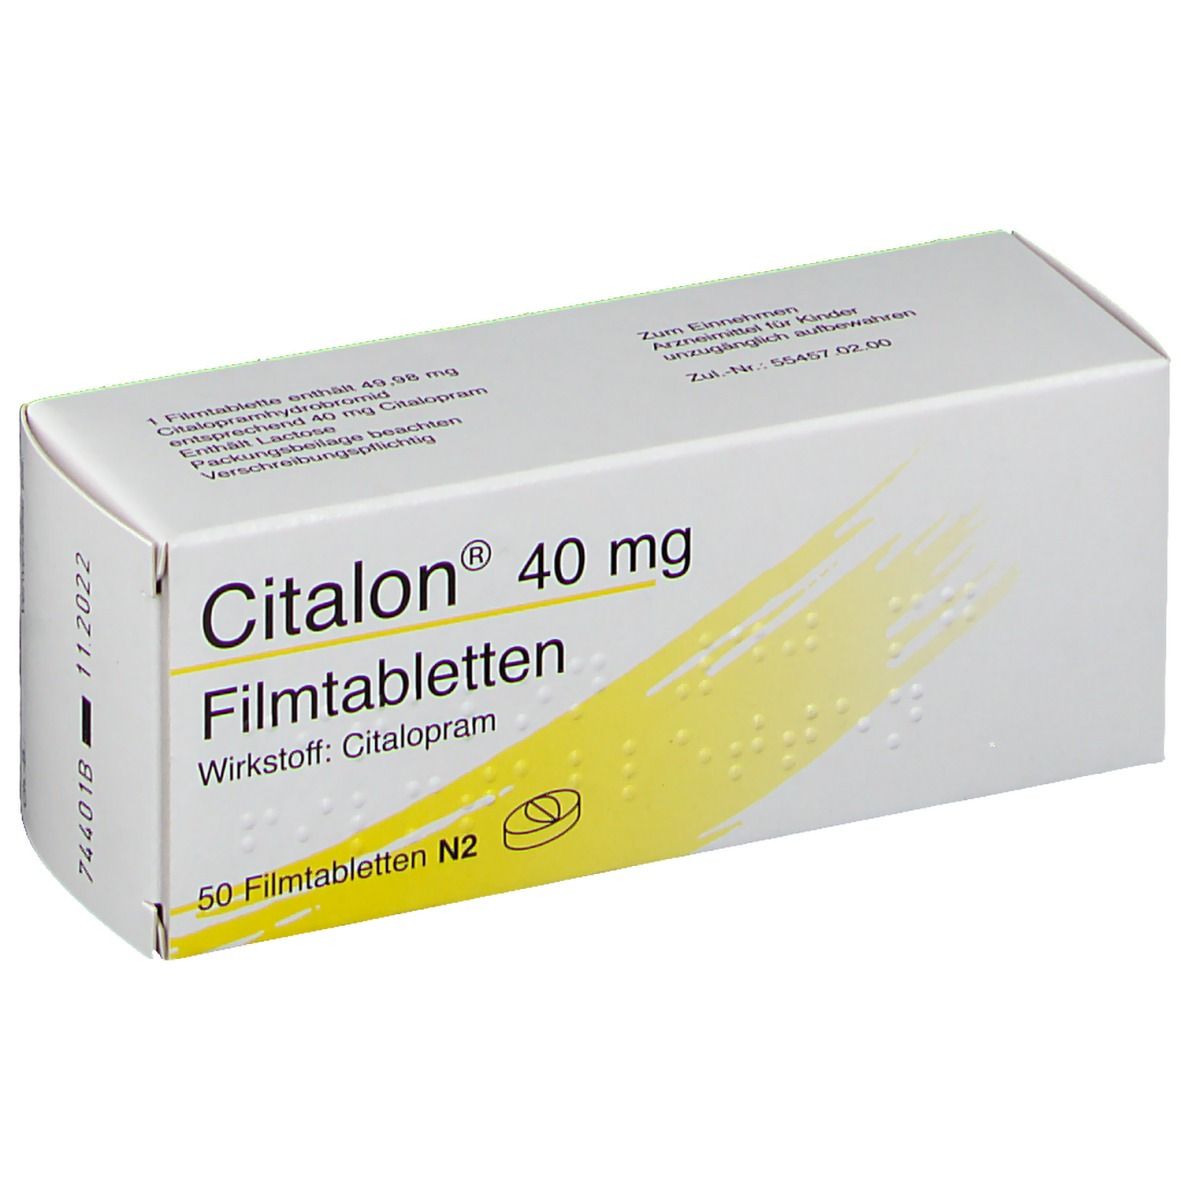 Citalon® 40 mg